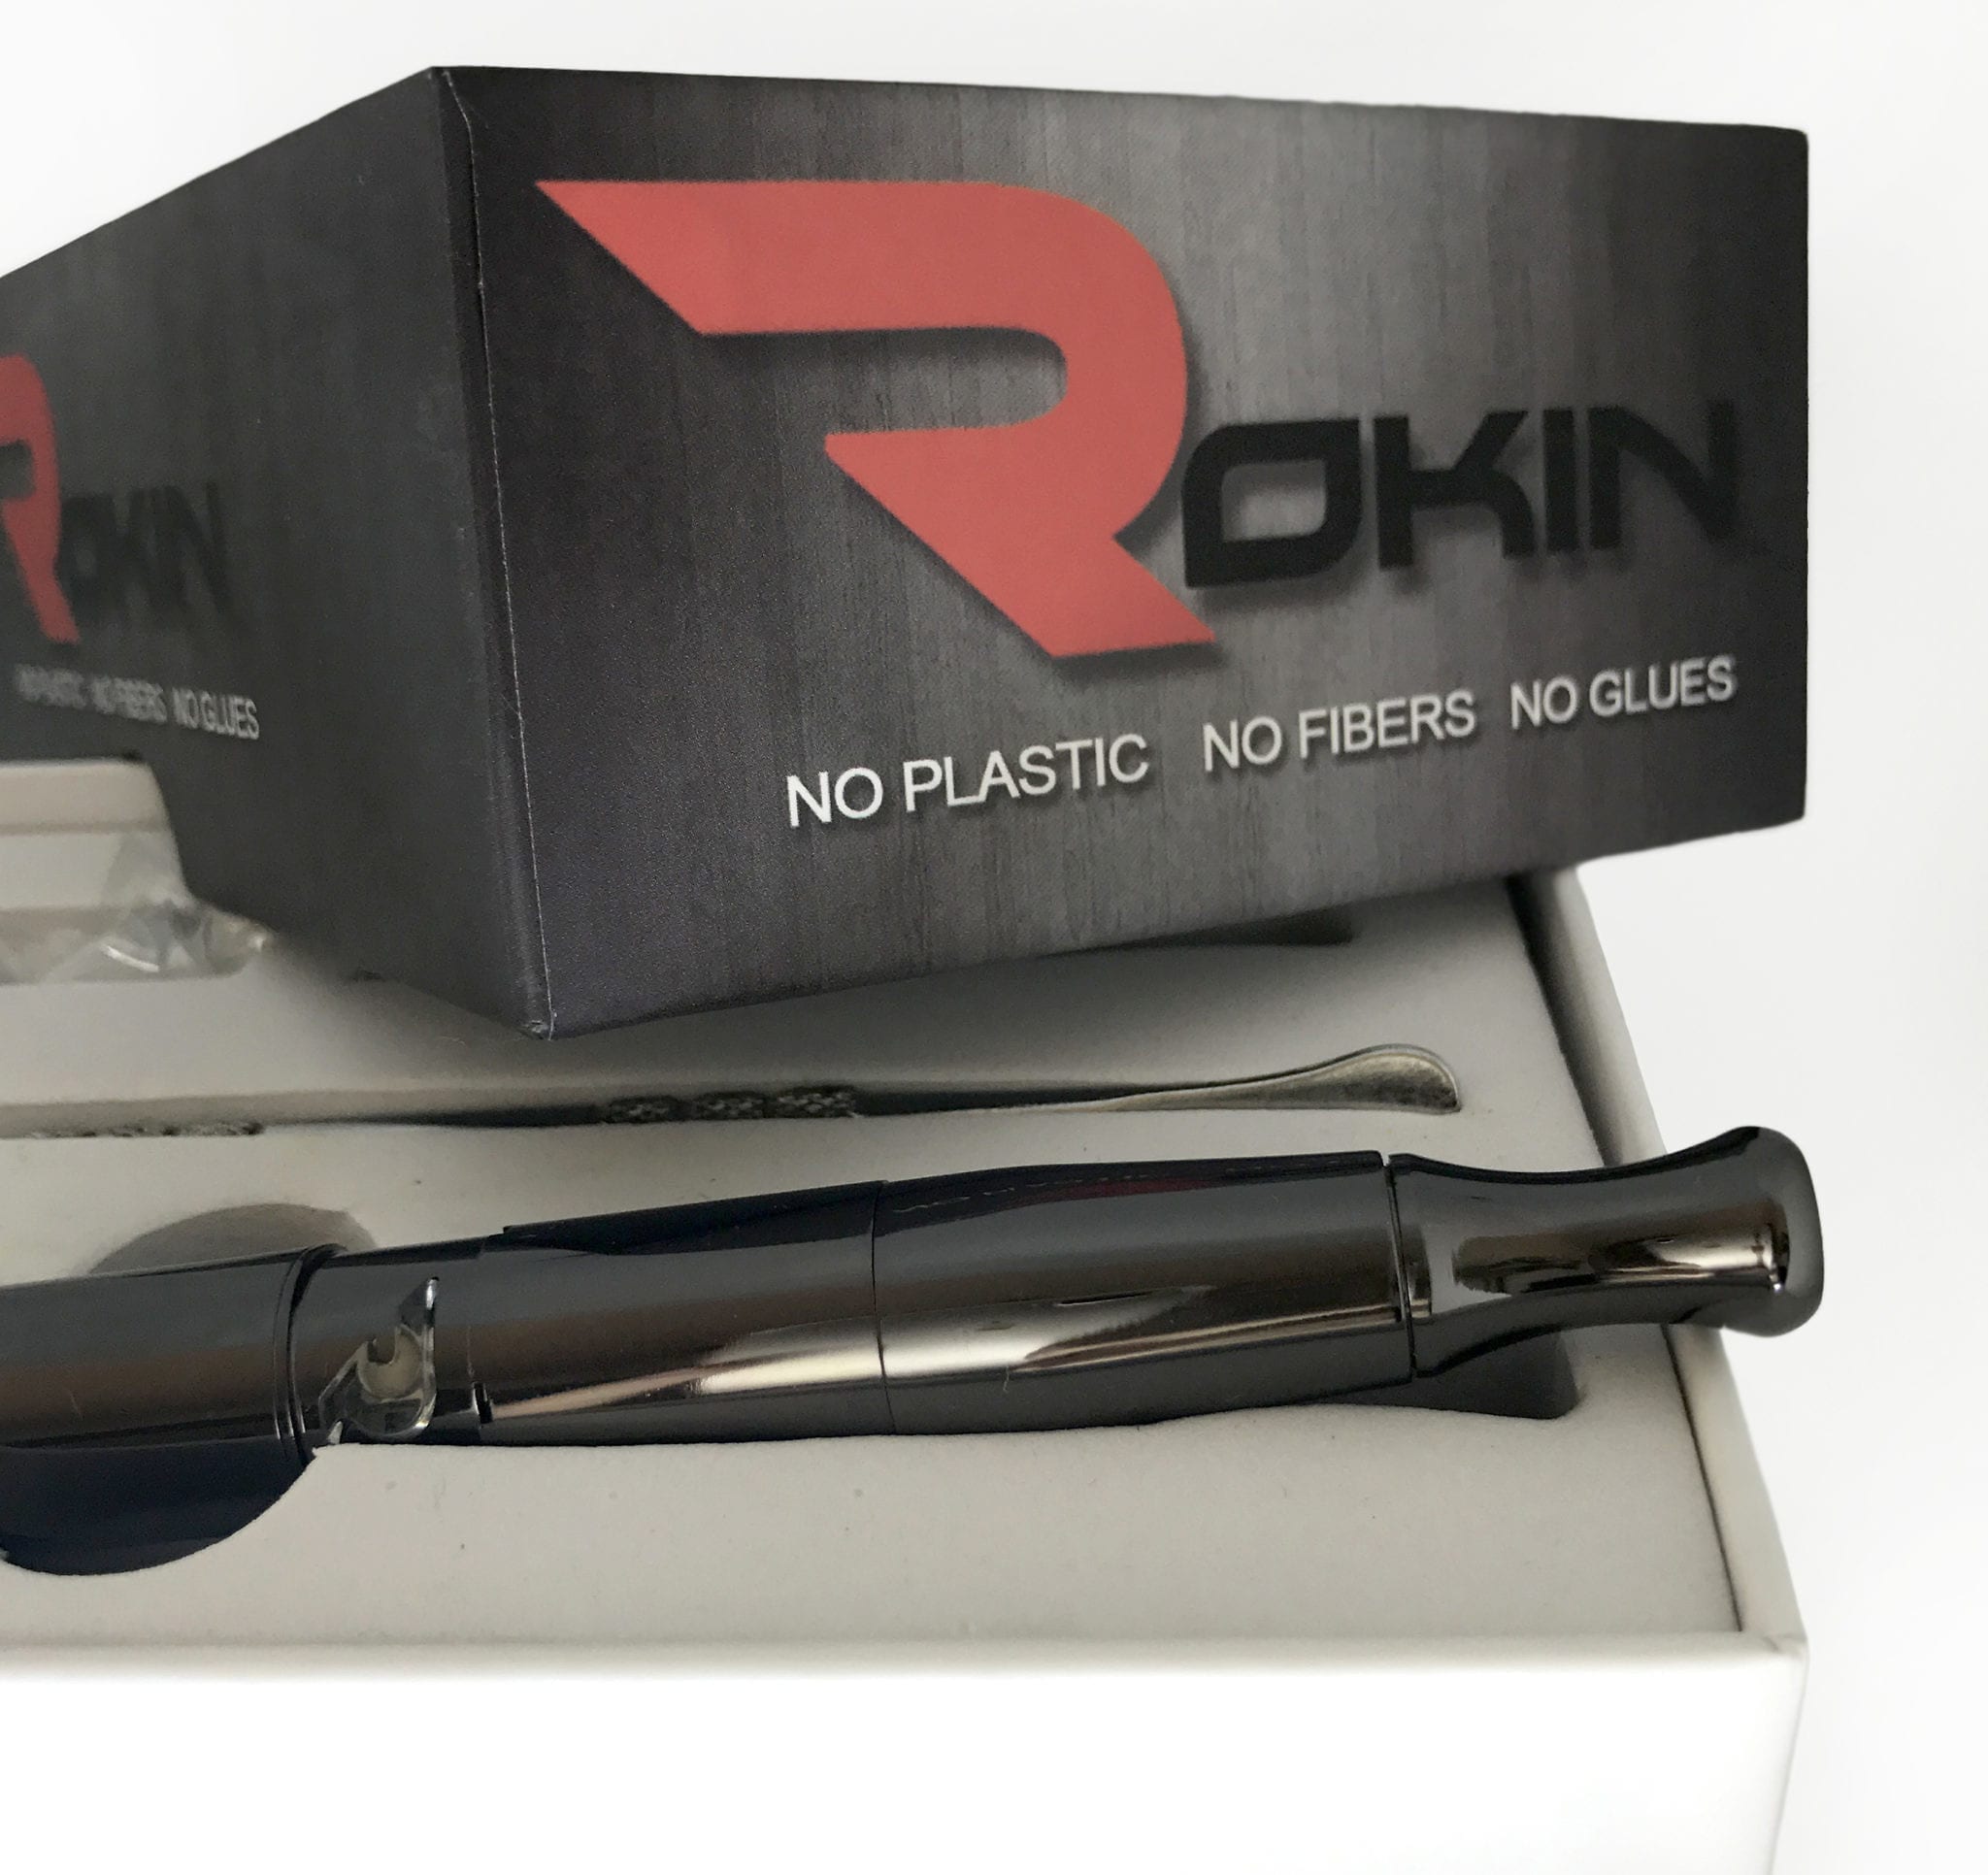 The Price of a Rokin Nitro Vaporizer Kit is $79.95